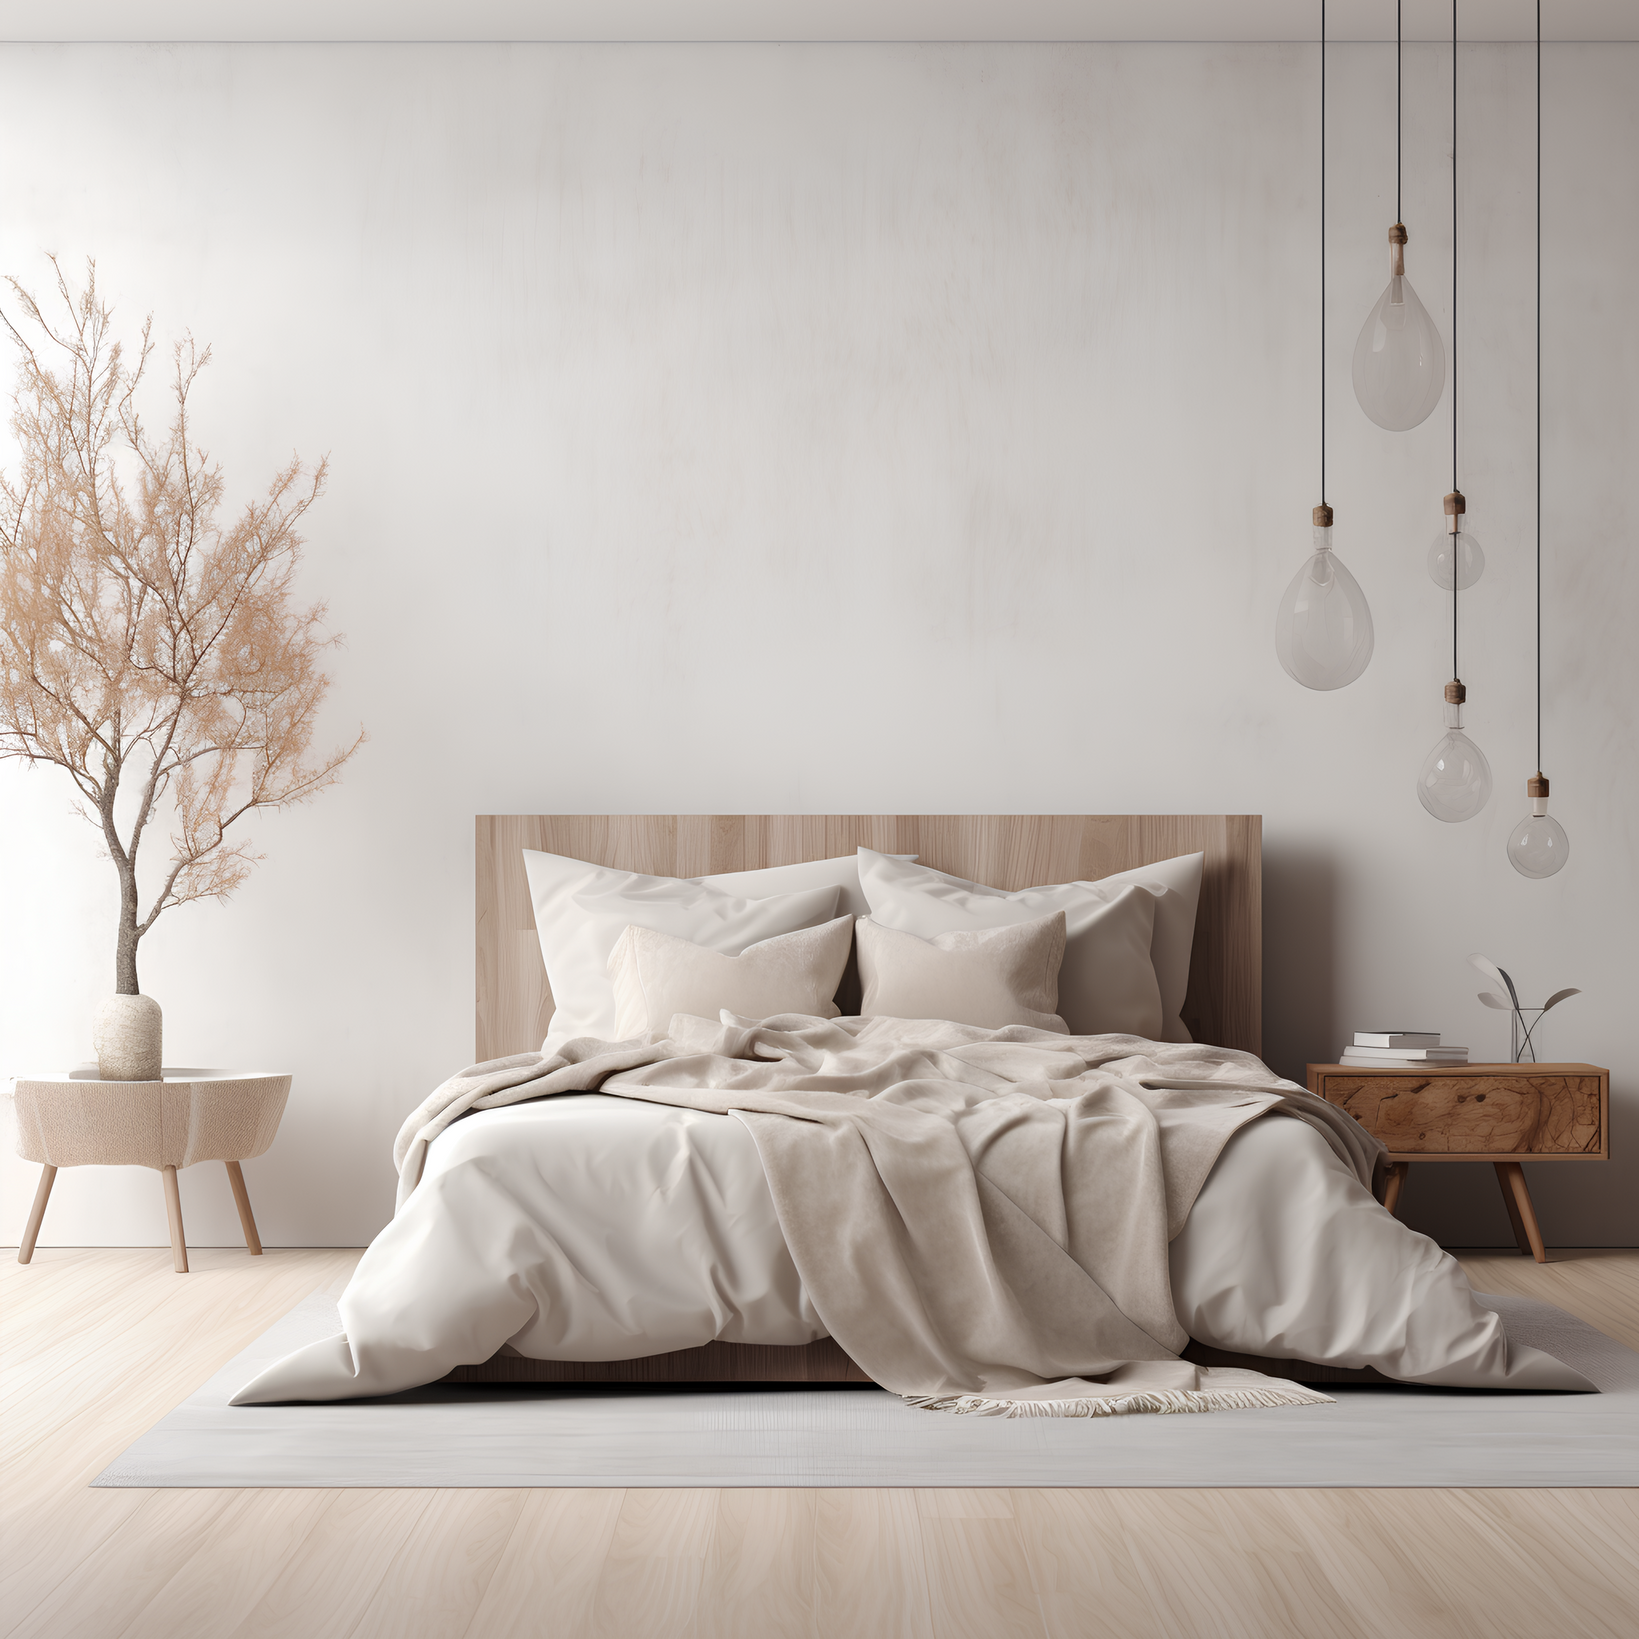 Scandinavian bedroom with empty wall mockup